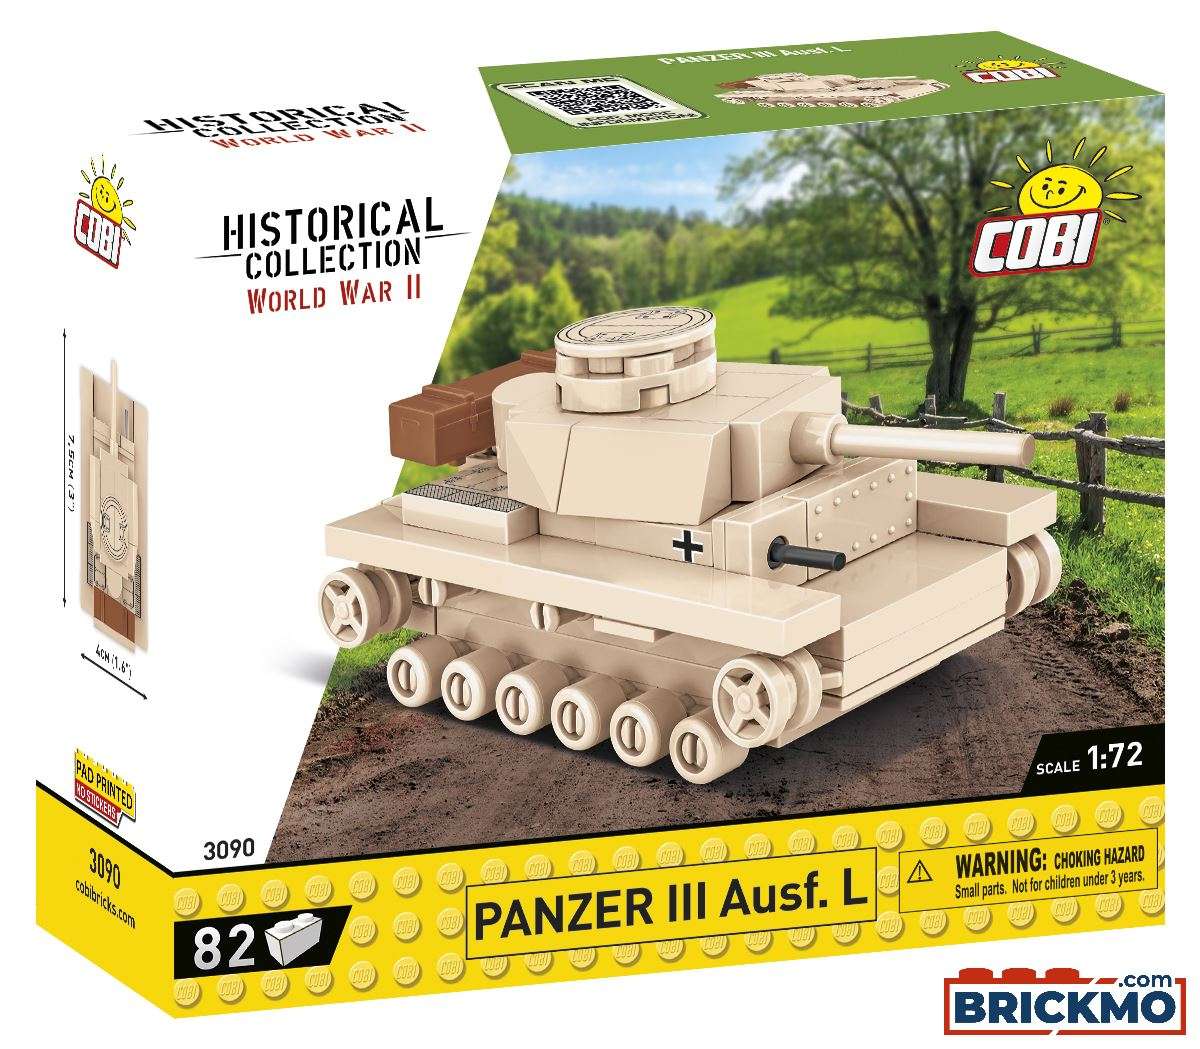 Cobi Historical Collection World War II 3090 Panzer III Ausf.L 3090